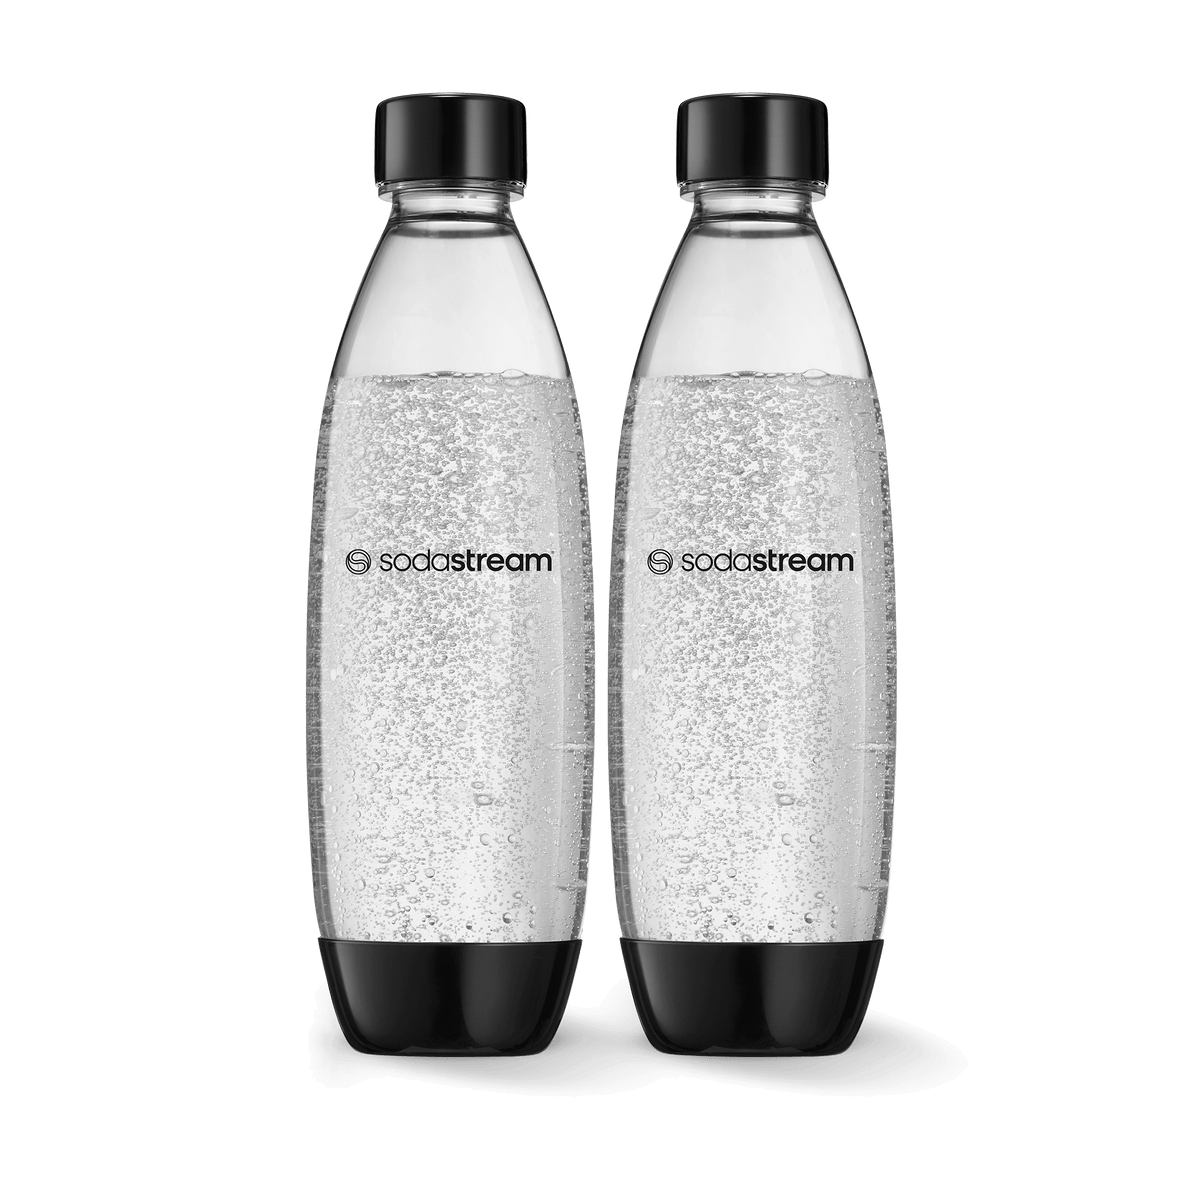 SodaStream Duo - Máquina agua con gas – SodaStream España